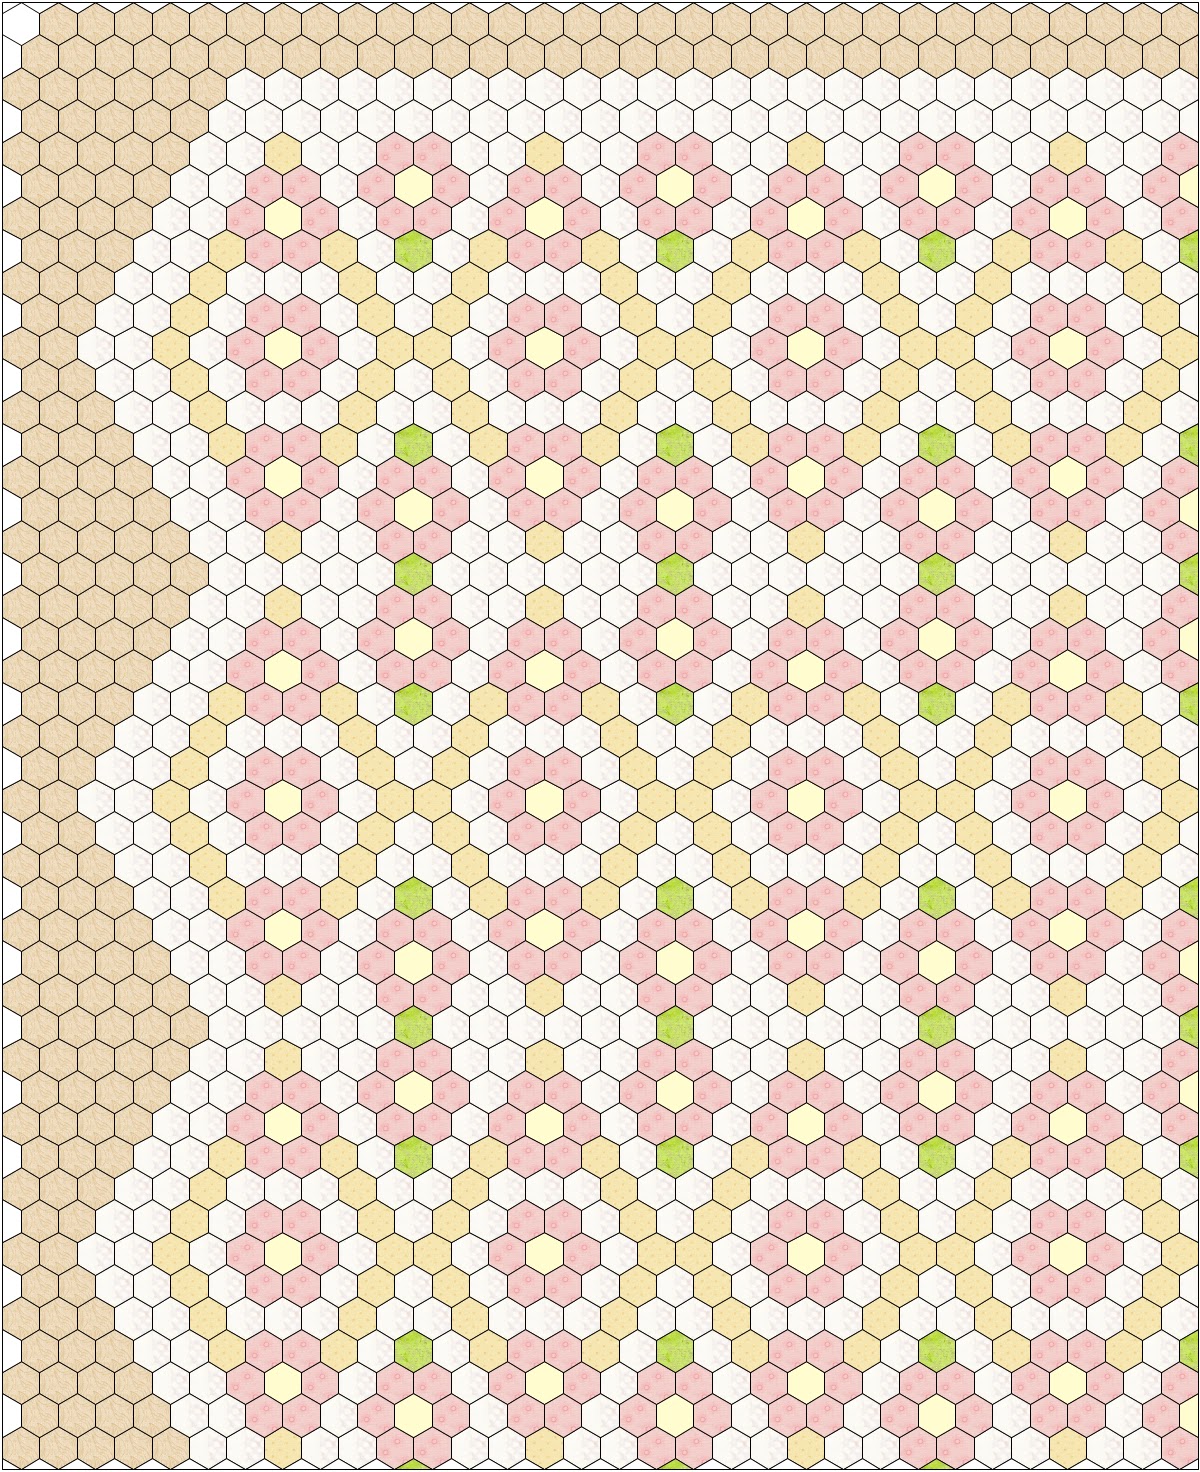 Hexagon+quilt+blocks